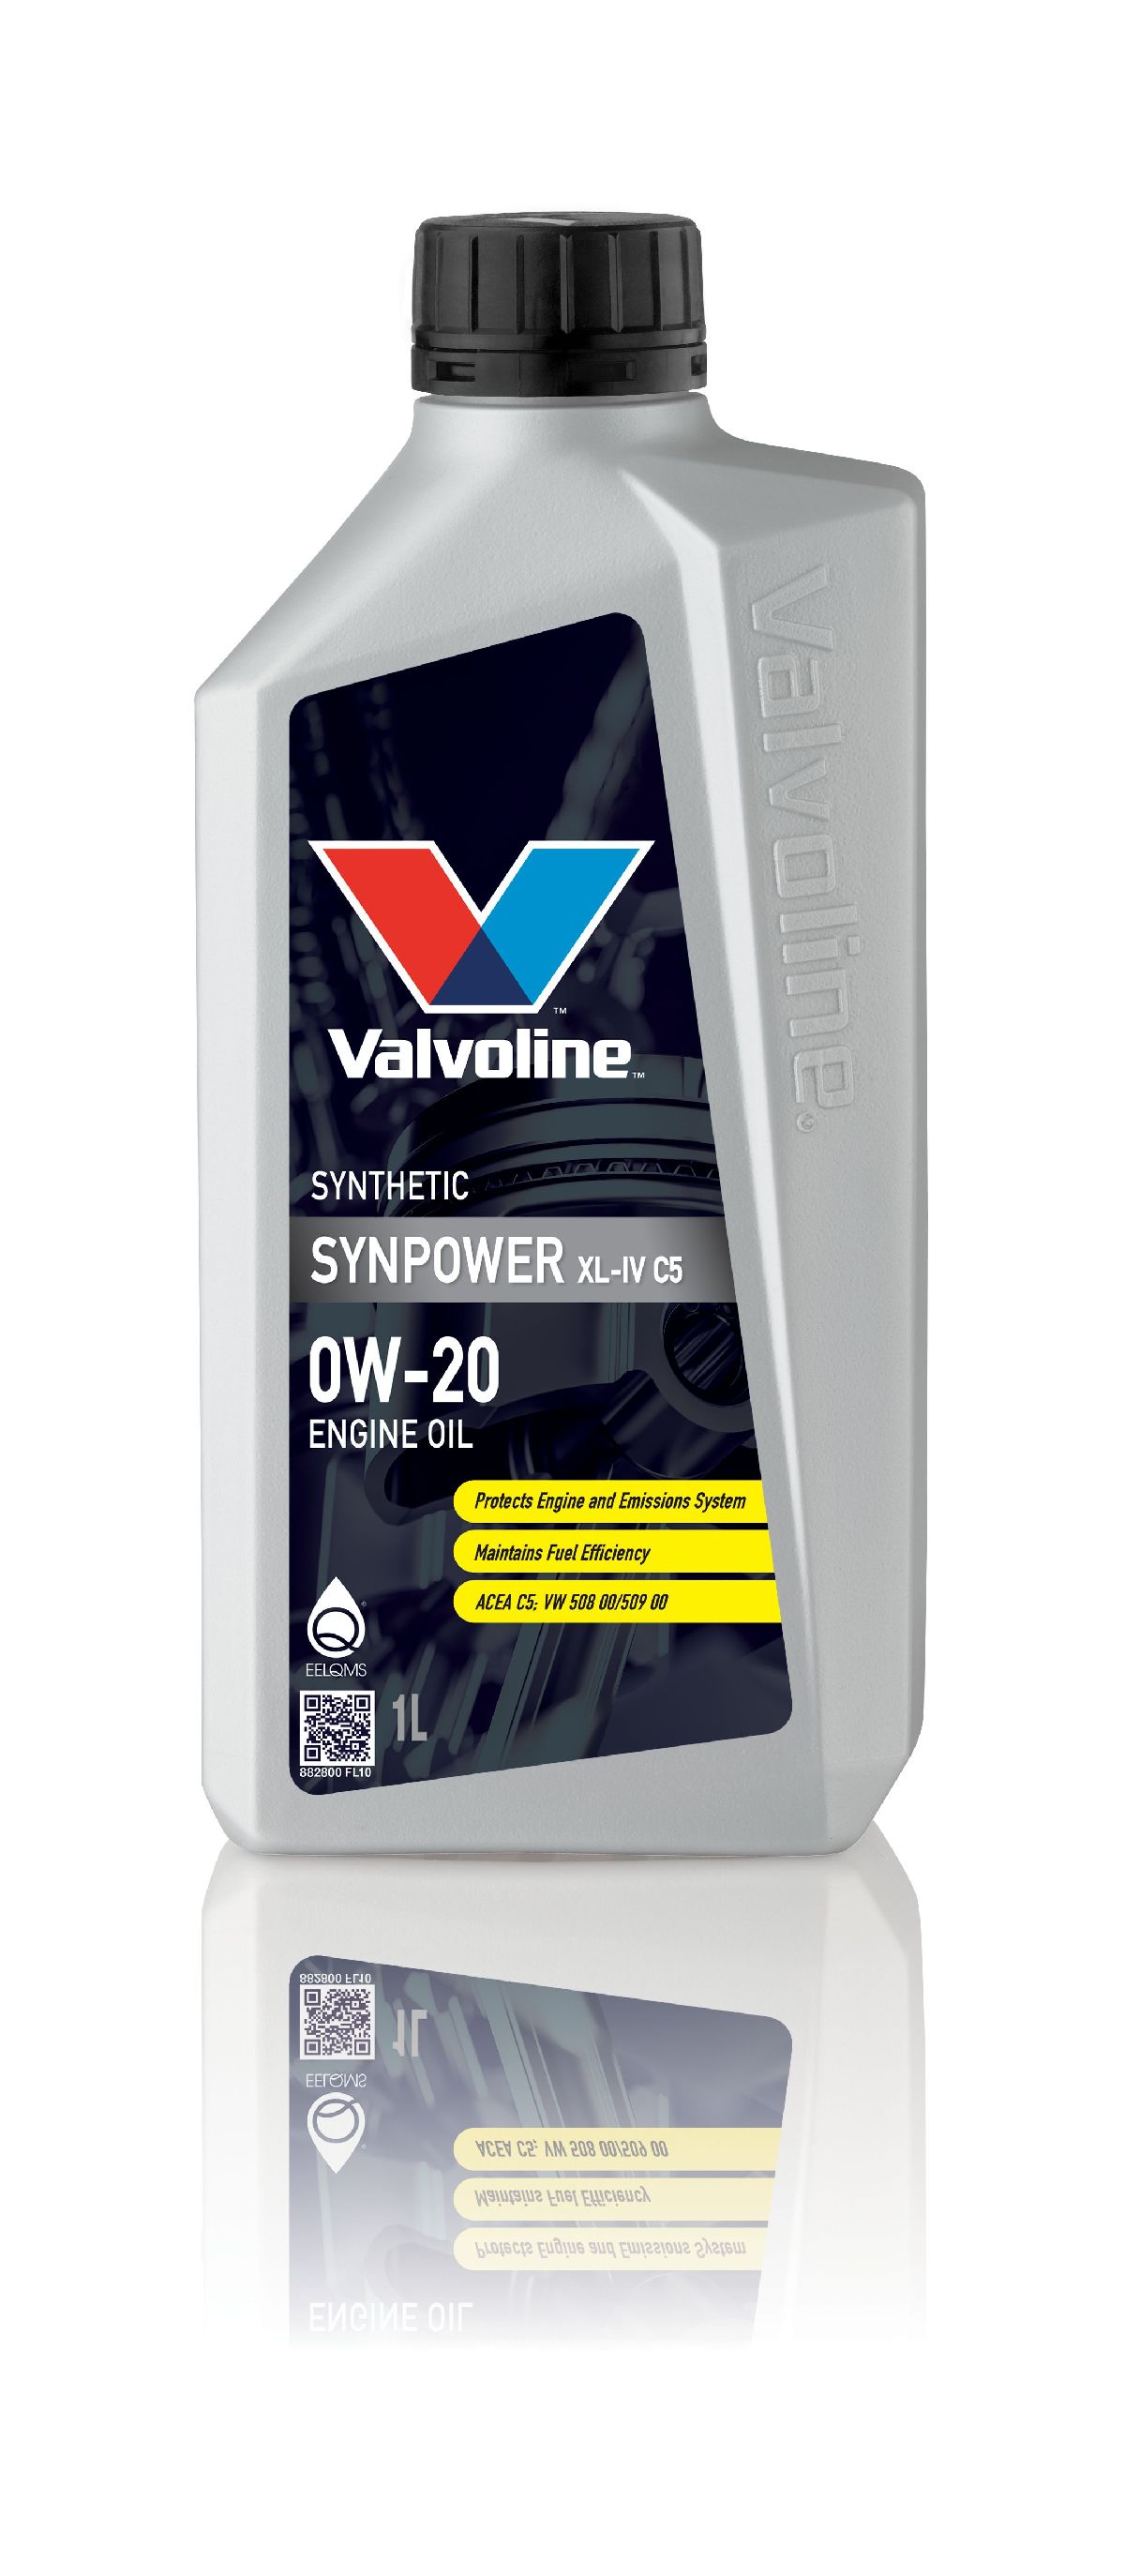 Valvoline Synpower XL-IV C5 0W-20